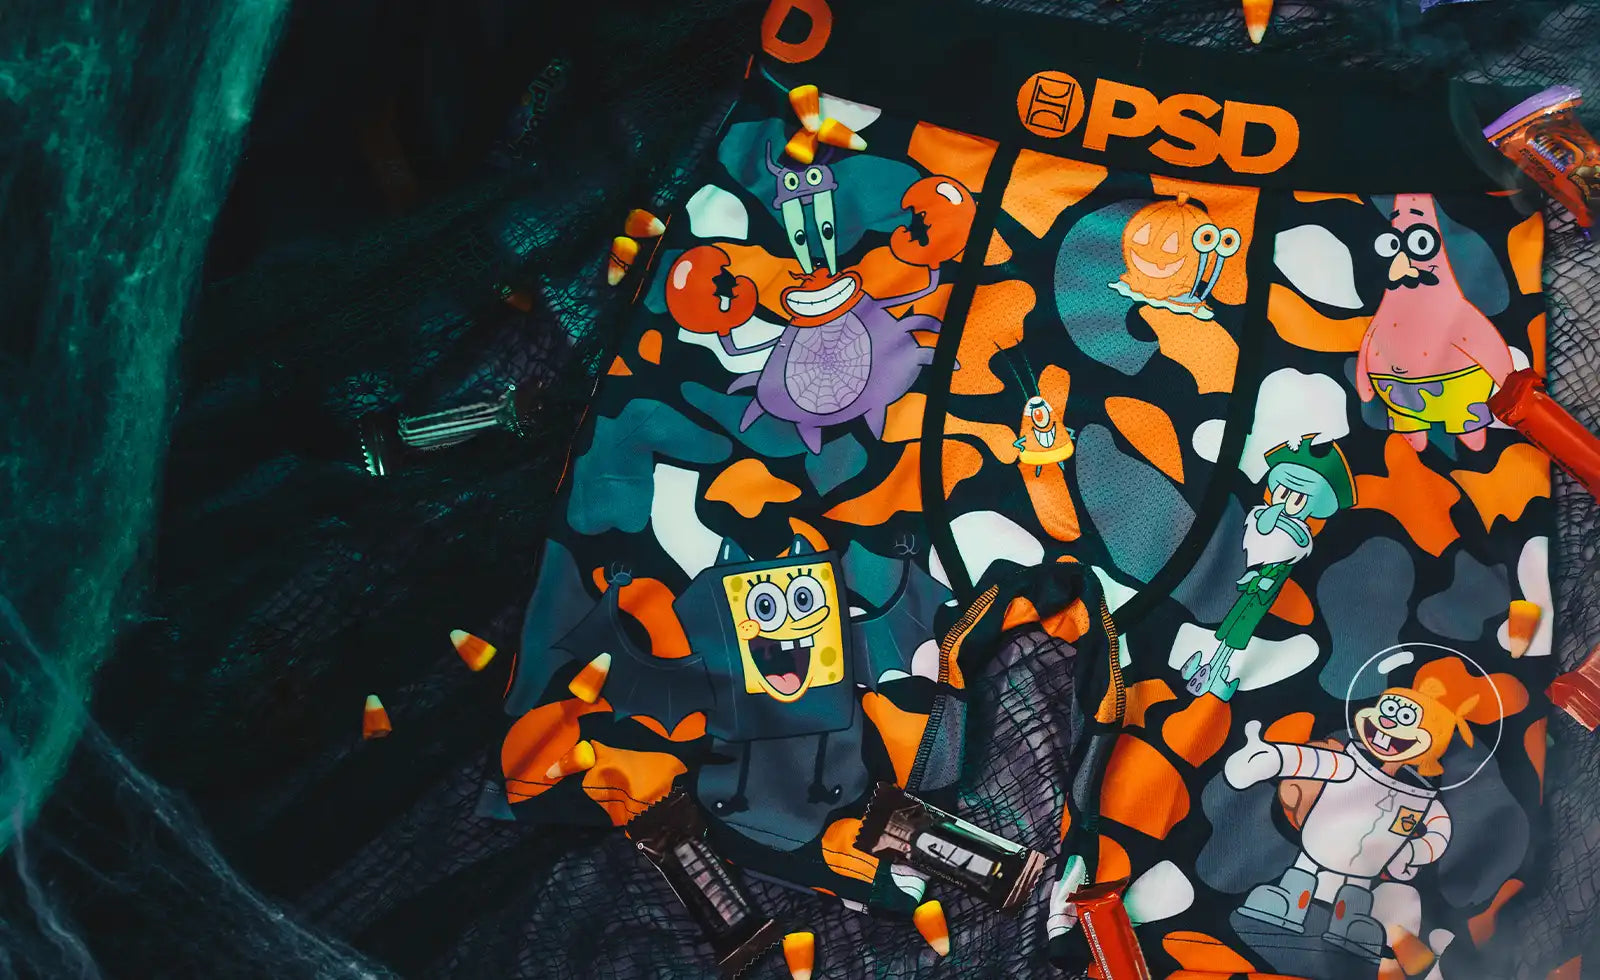 PSD x Spongebob Squarepants Black & Yellow Tie Dye Boyshort Underwear